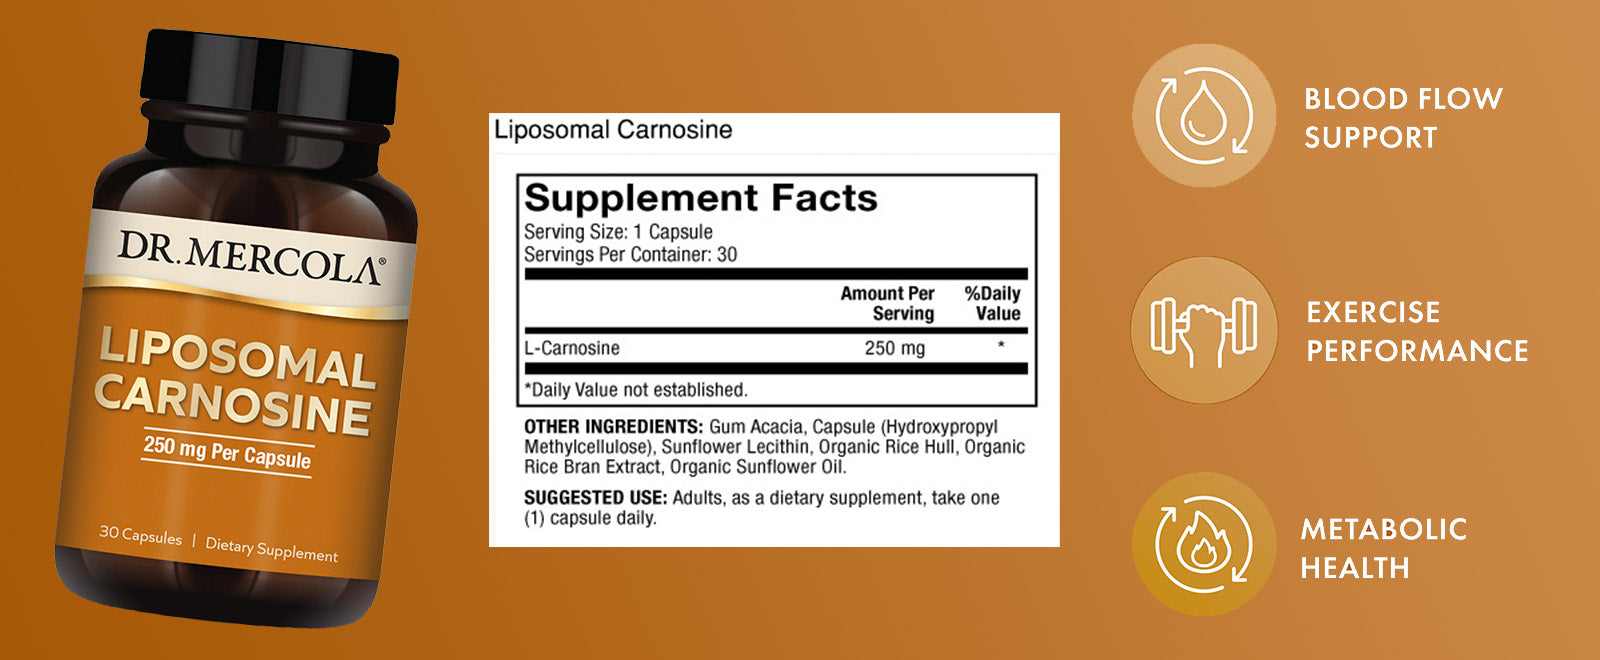 Liposomal Carnosine - Shop at BiosenseClinic.com - Revitalize Your Cells, Rejuvenate Your Life with Liposomal Carnosine!